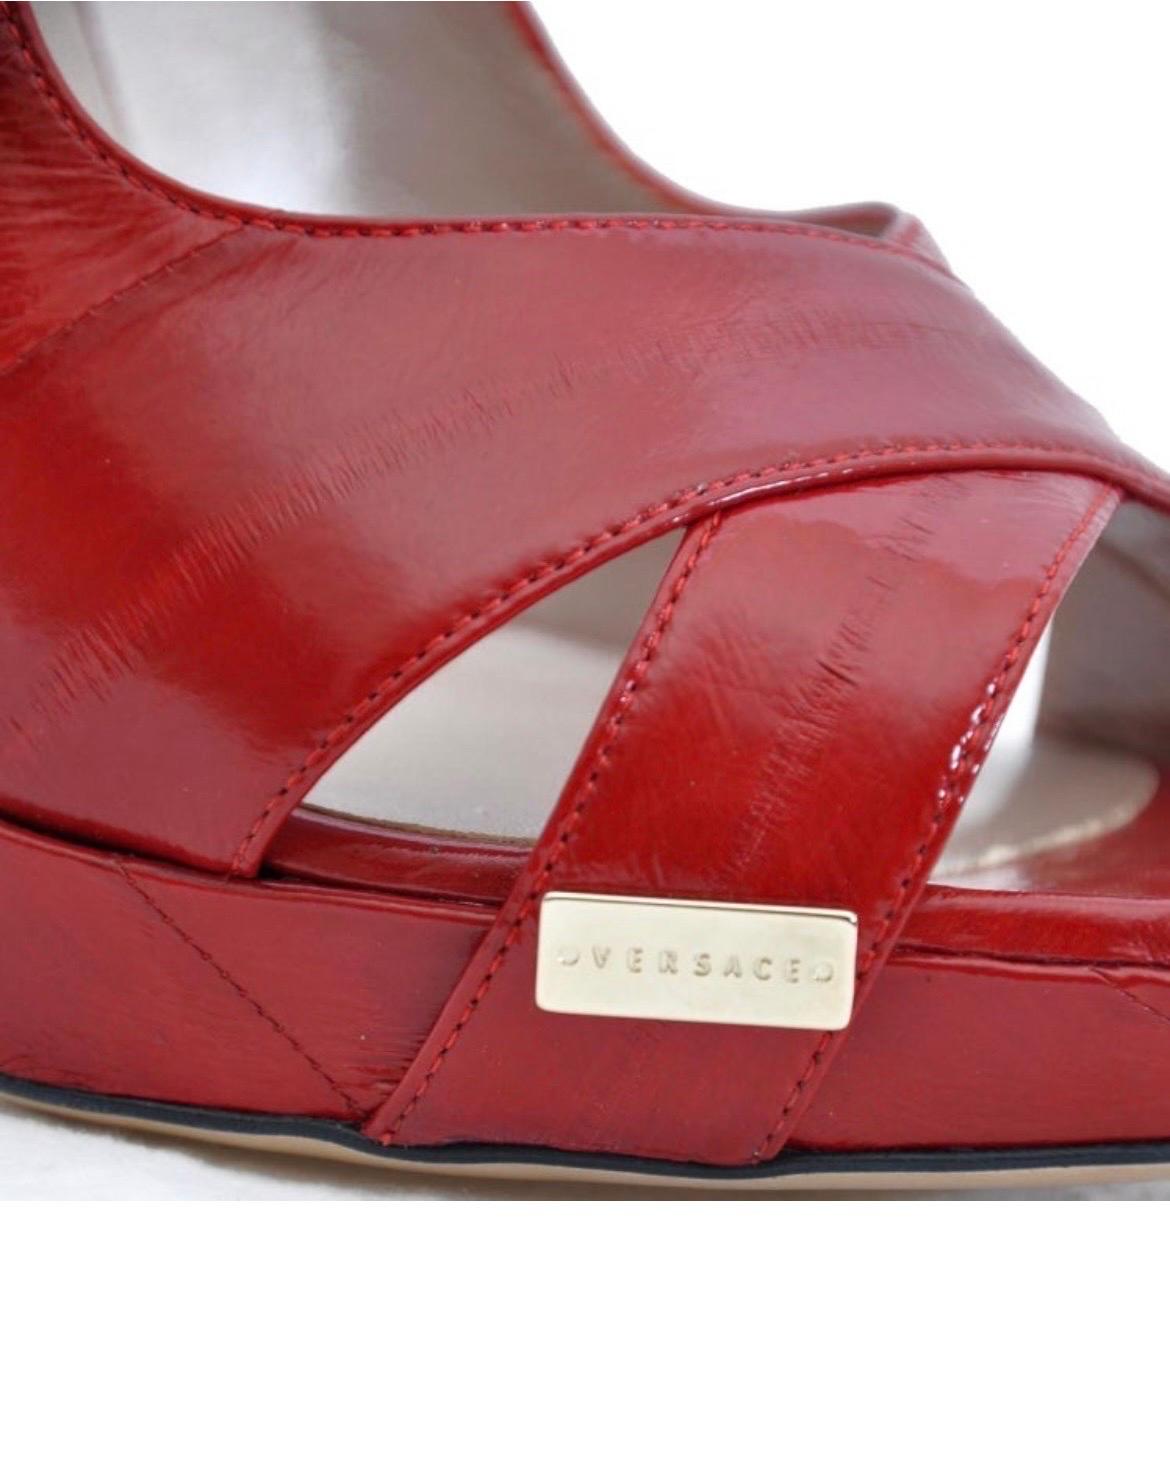 Women's S/S 2002 Vintage Versace Red Eel Skin Platform Shoes  40 -10 NWT For Sale